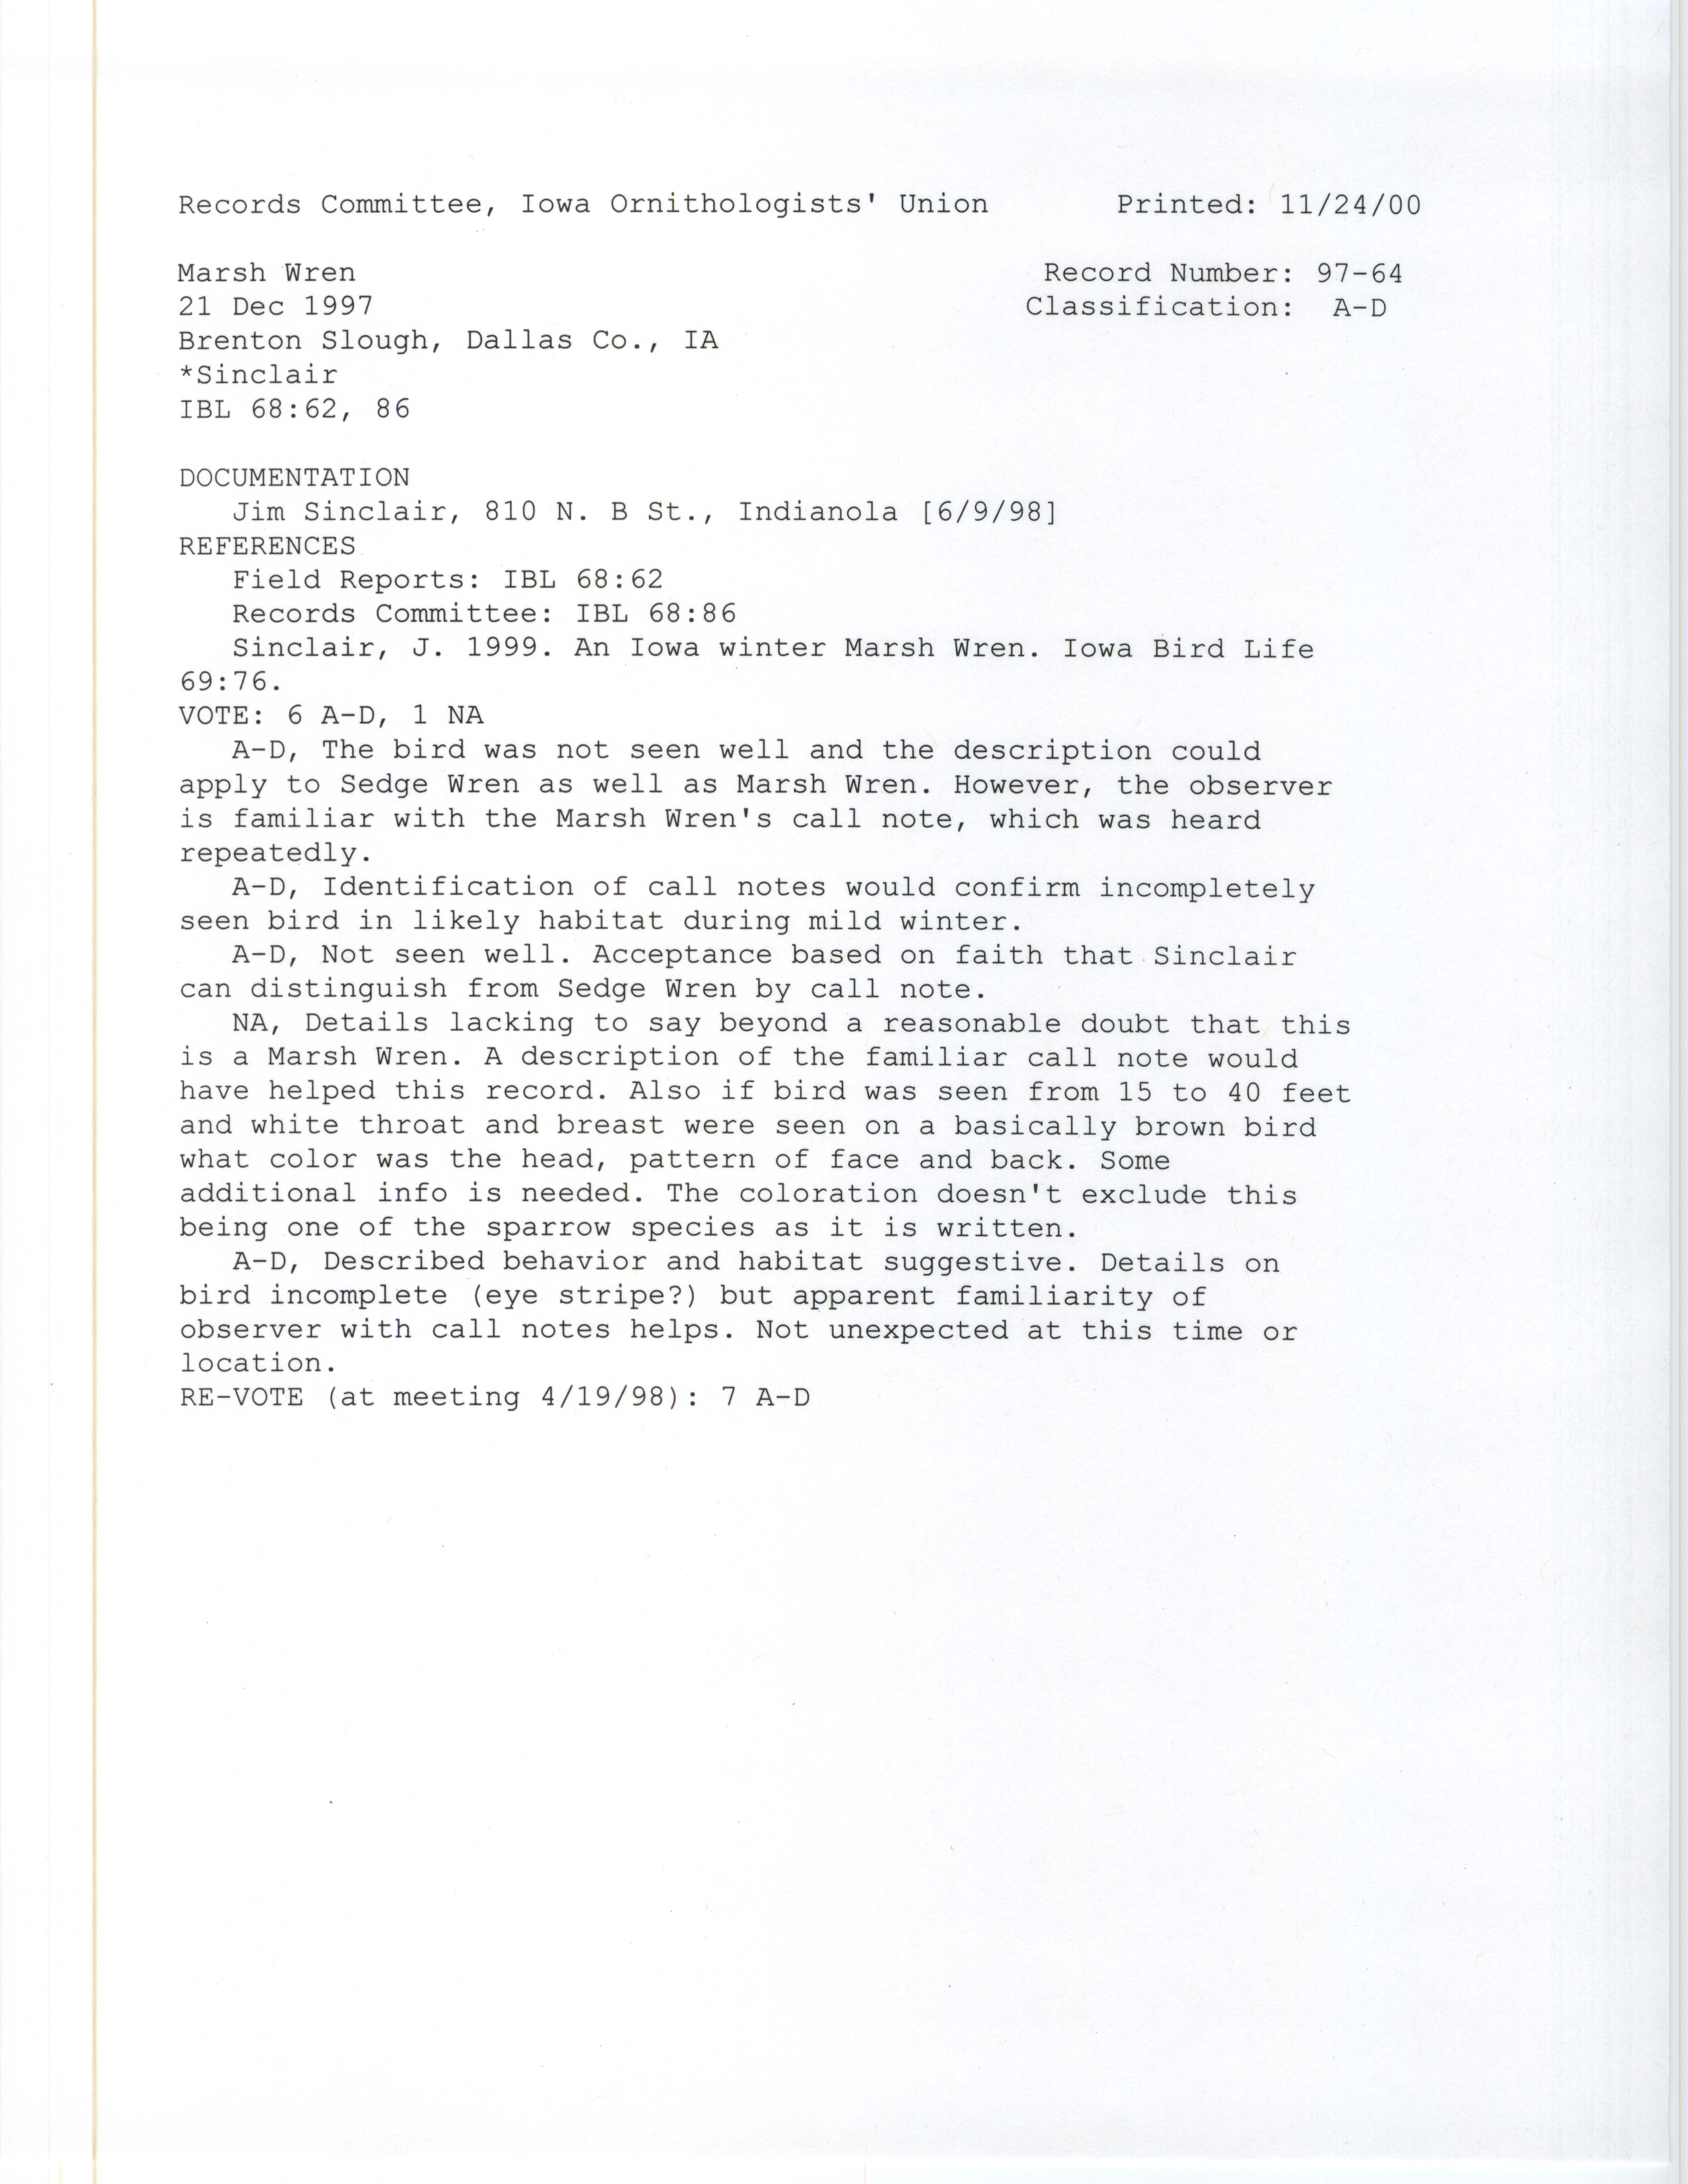 Records Committee review for rare bird sighting for Marsh Wren at Brenton Slough, 1997